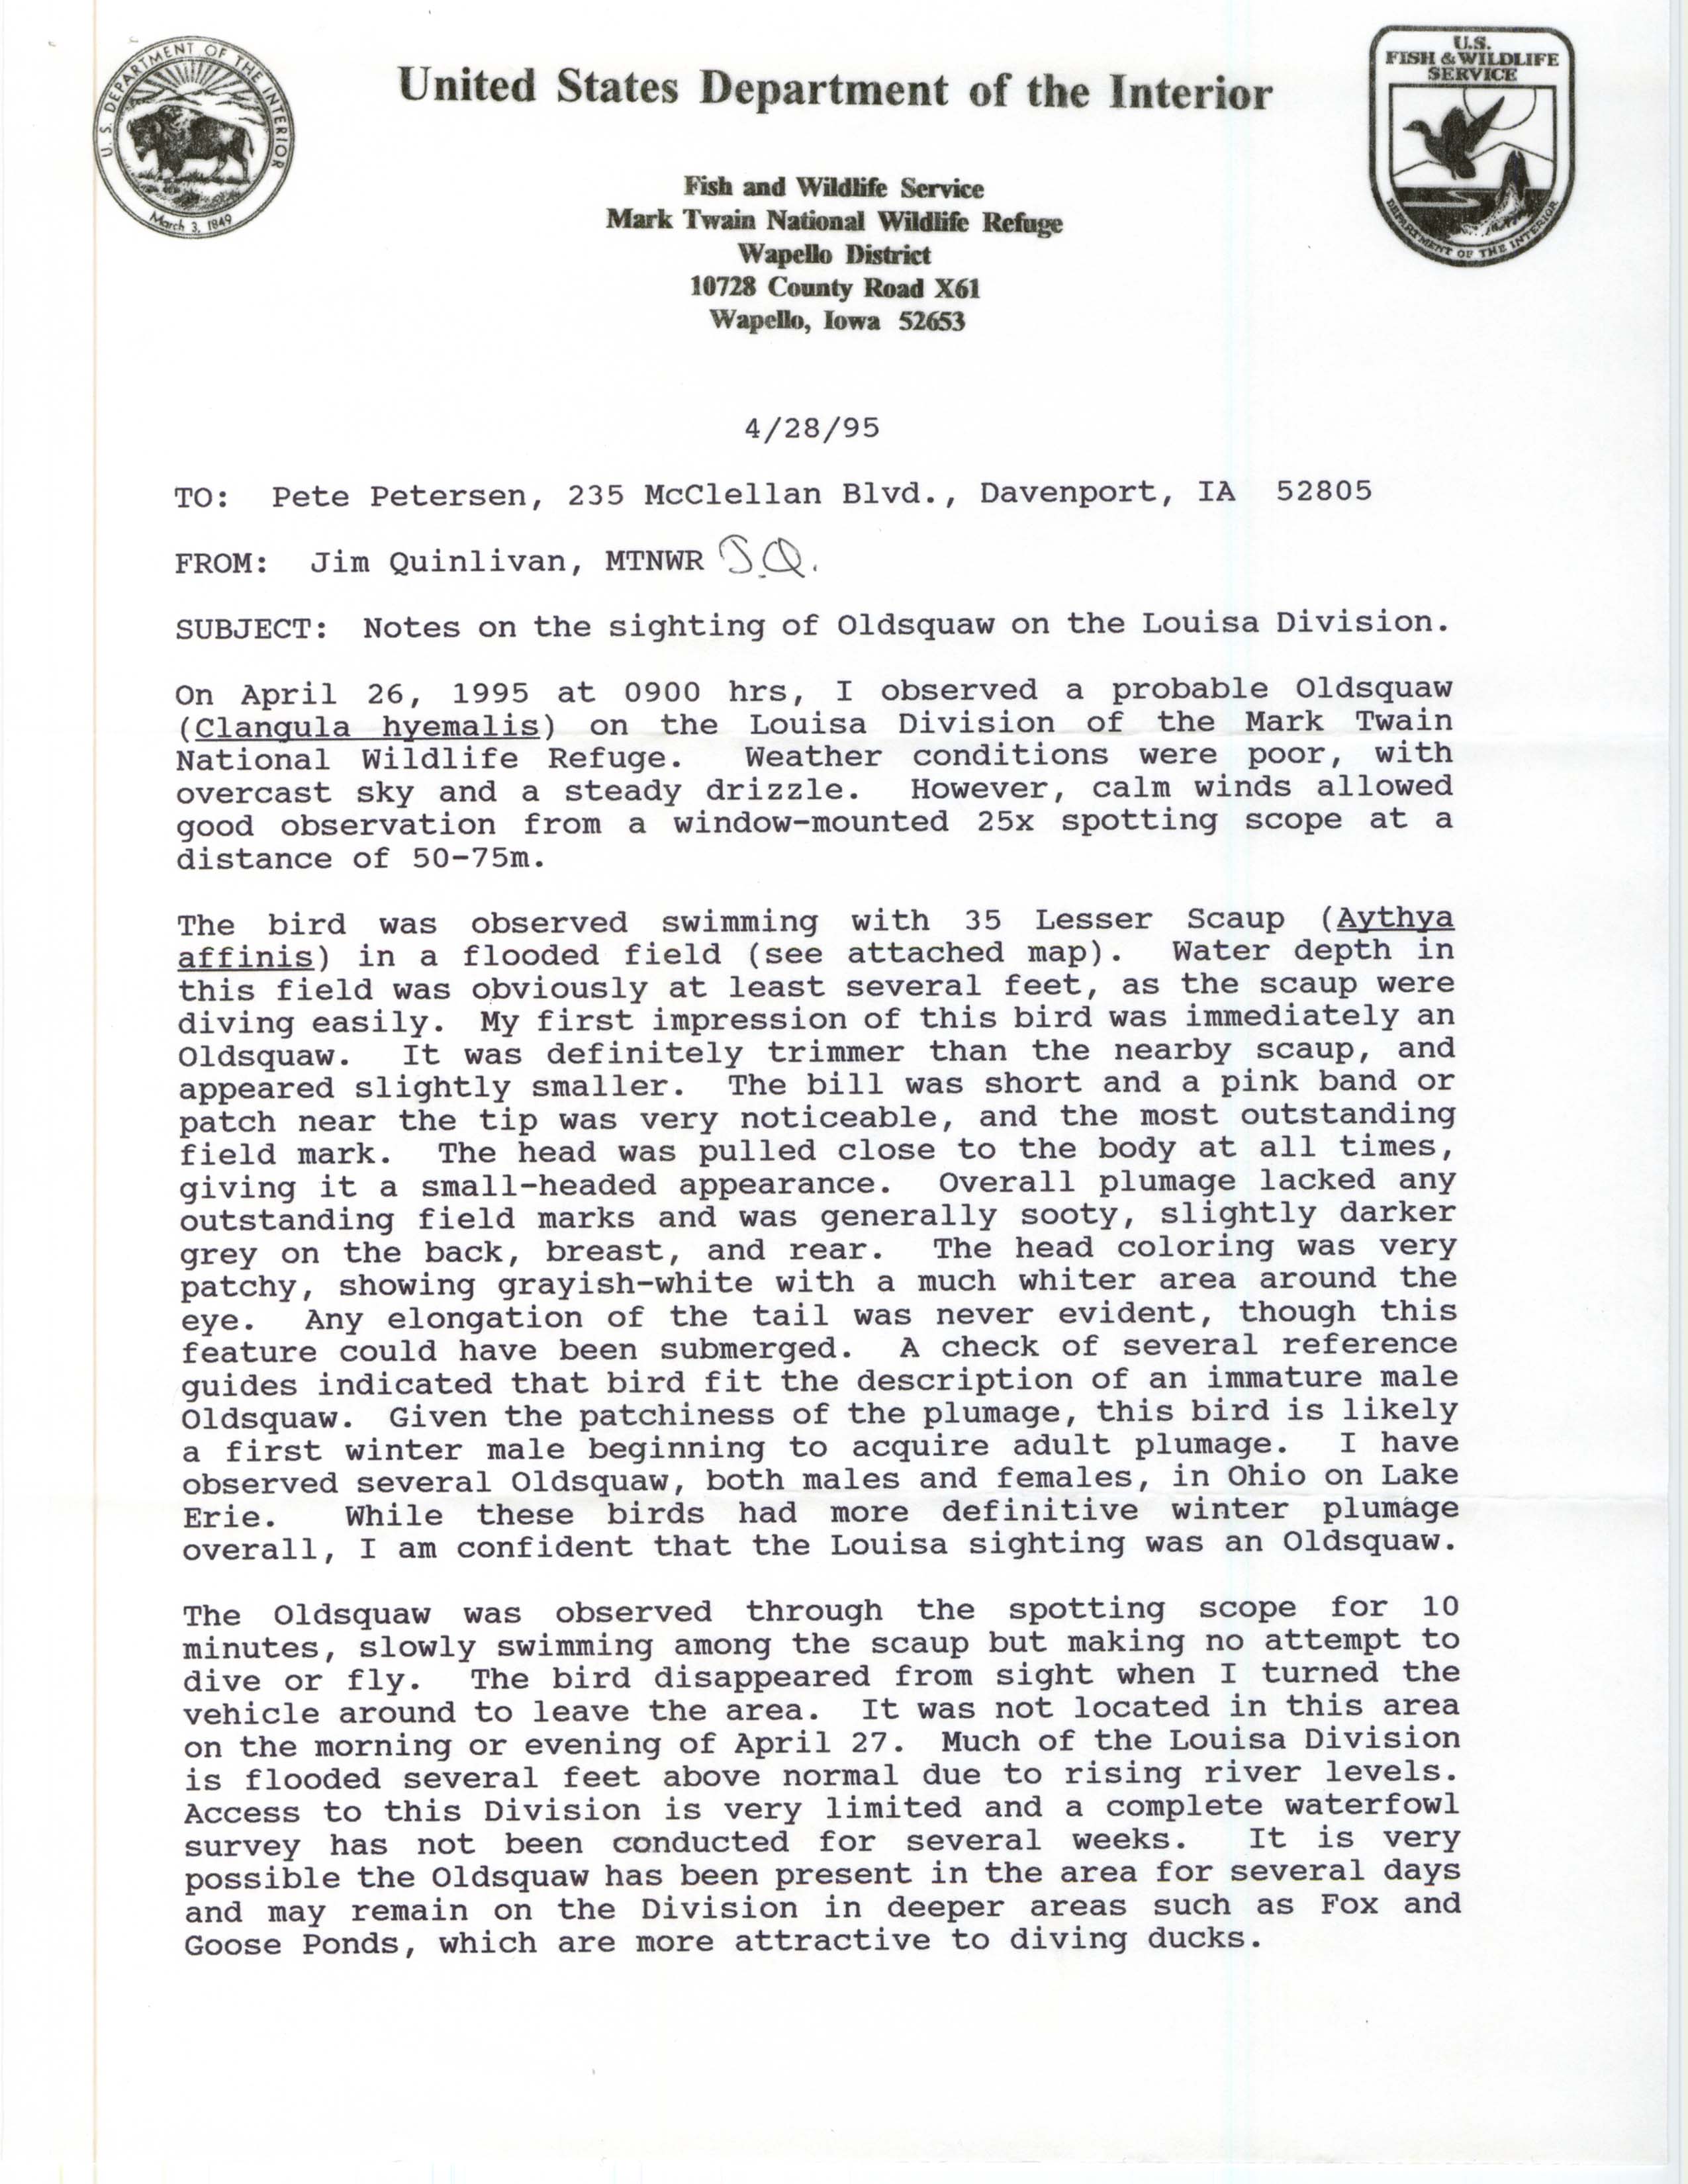 Rare bird documentation form for Long-tailed Duck at Mark Twain National Wildlife Refuge, 1995